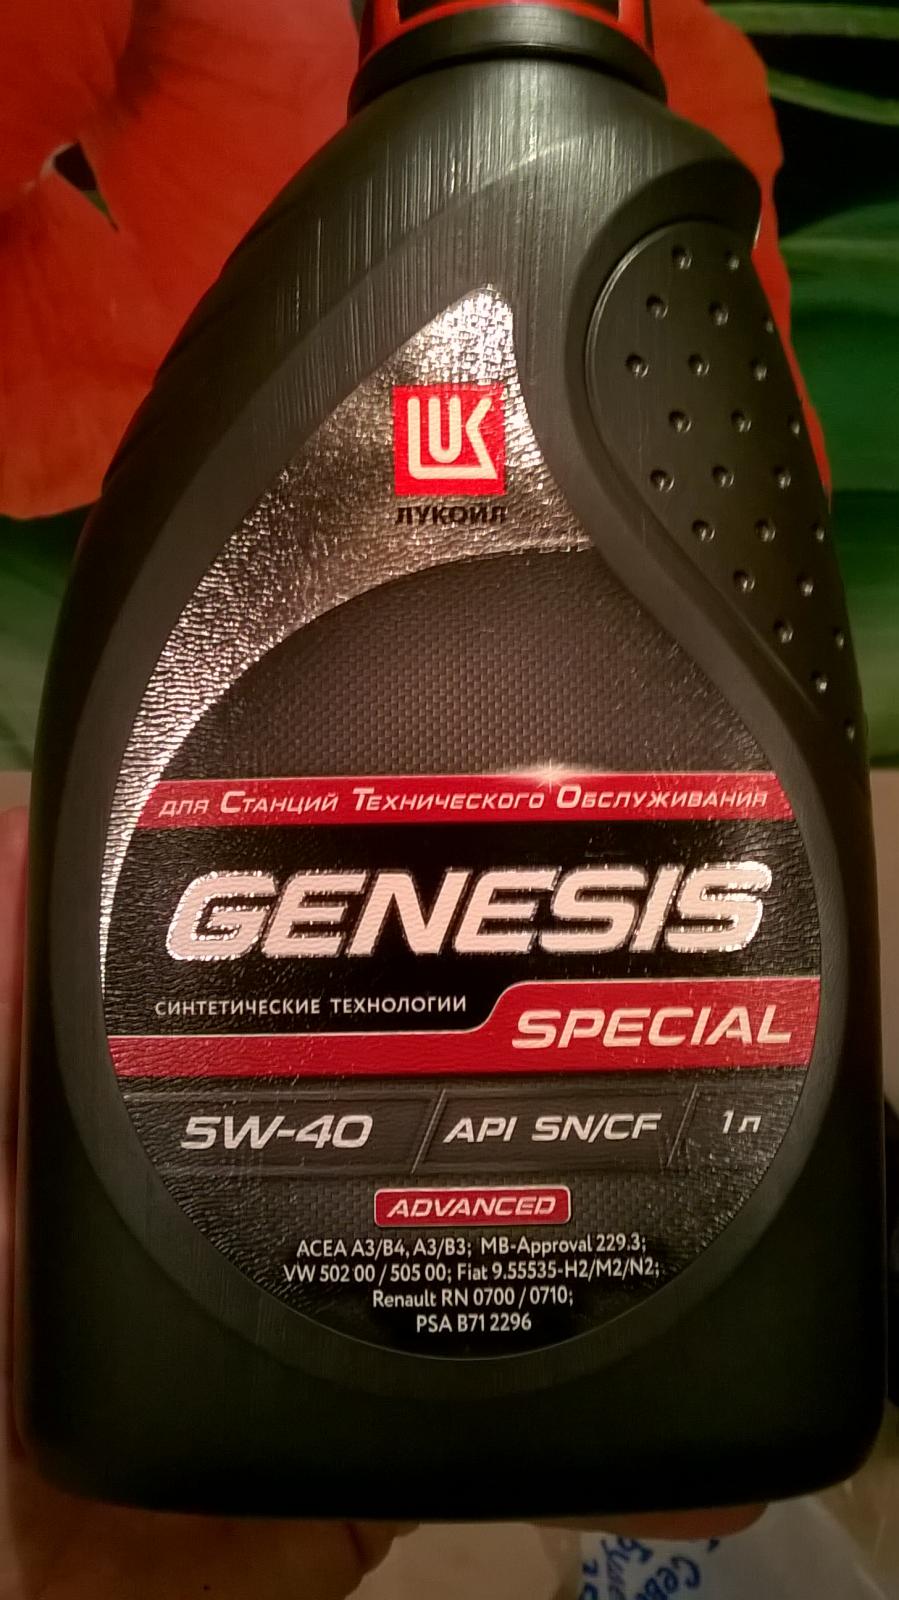 Lukoil genesis special. Genesis Special Advanced 5w-40. Genesis Special Advanced 5w-40 4л артикул. Масло моторное Лукойл Genesis Special a3/b4 5w40. Genesis Special 5w-40 5л.